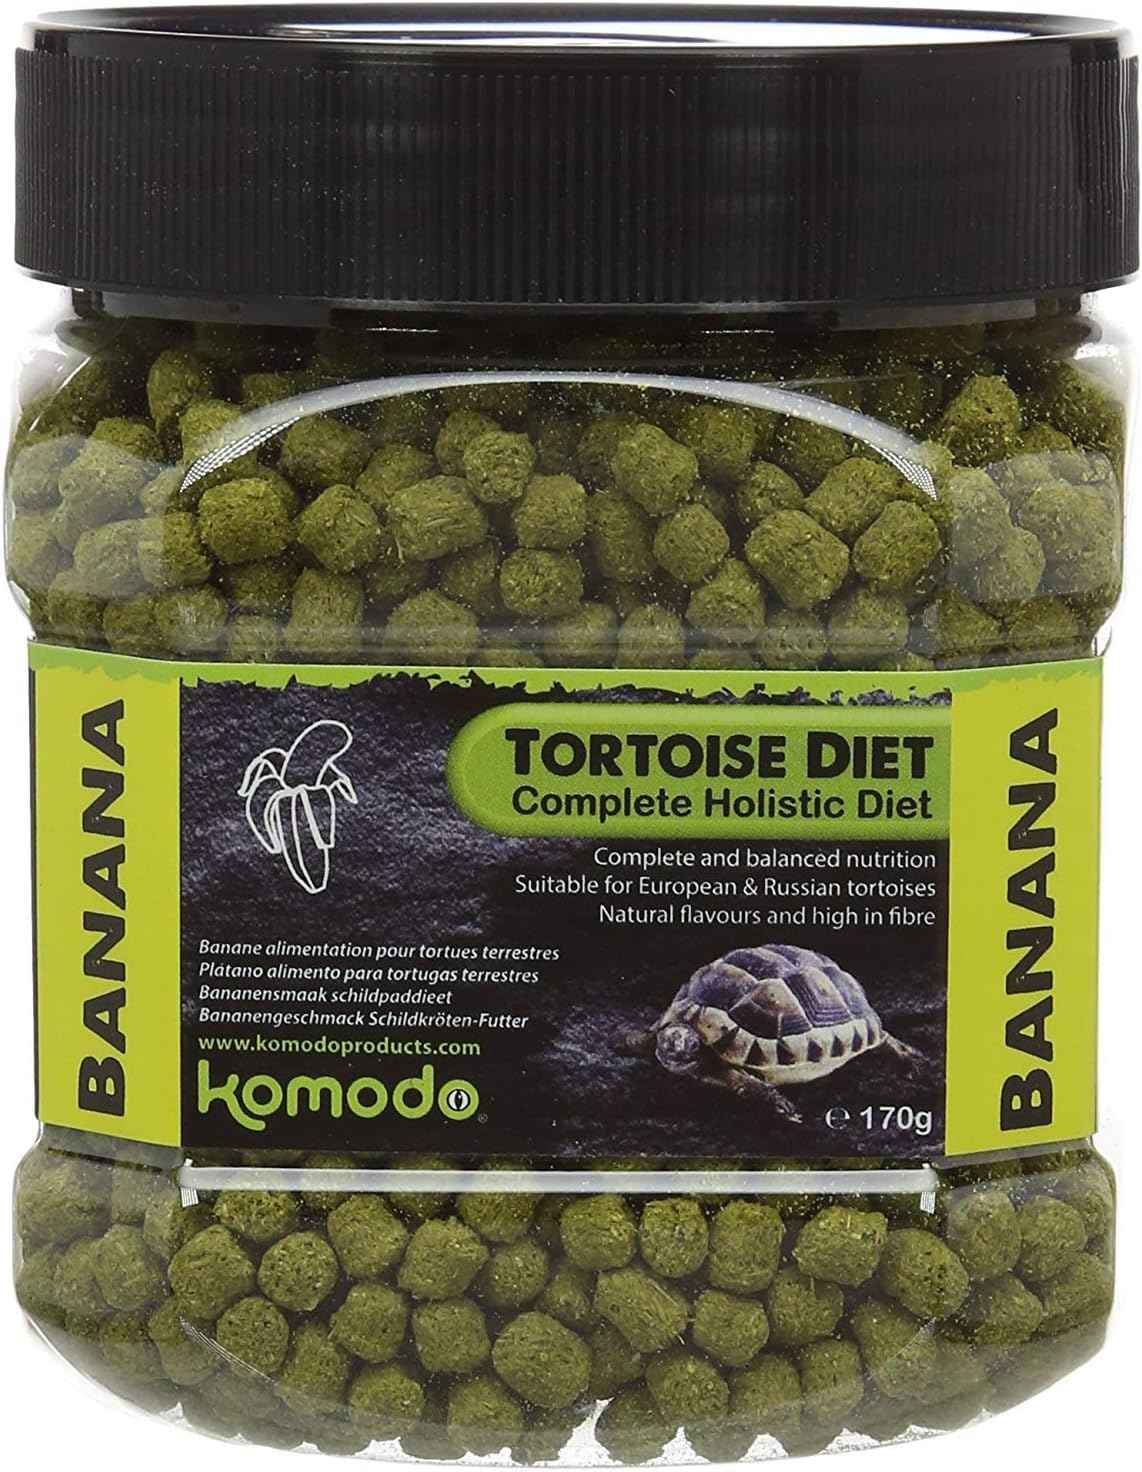 komodo-tortoise-diet-banana-170-gr-nourriture-saveur-banane-pour-tortues-de-terre